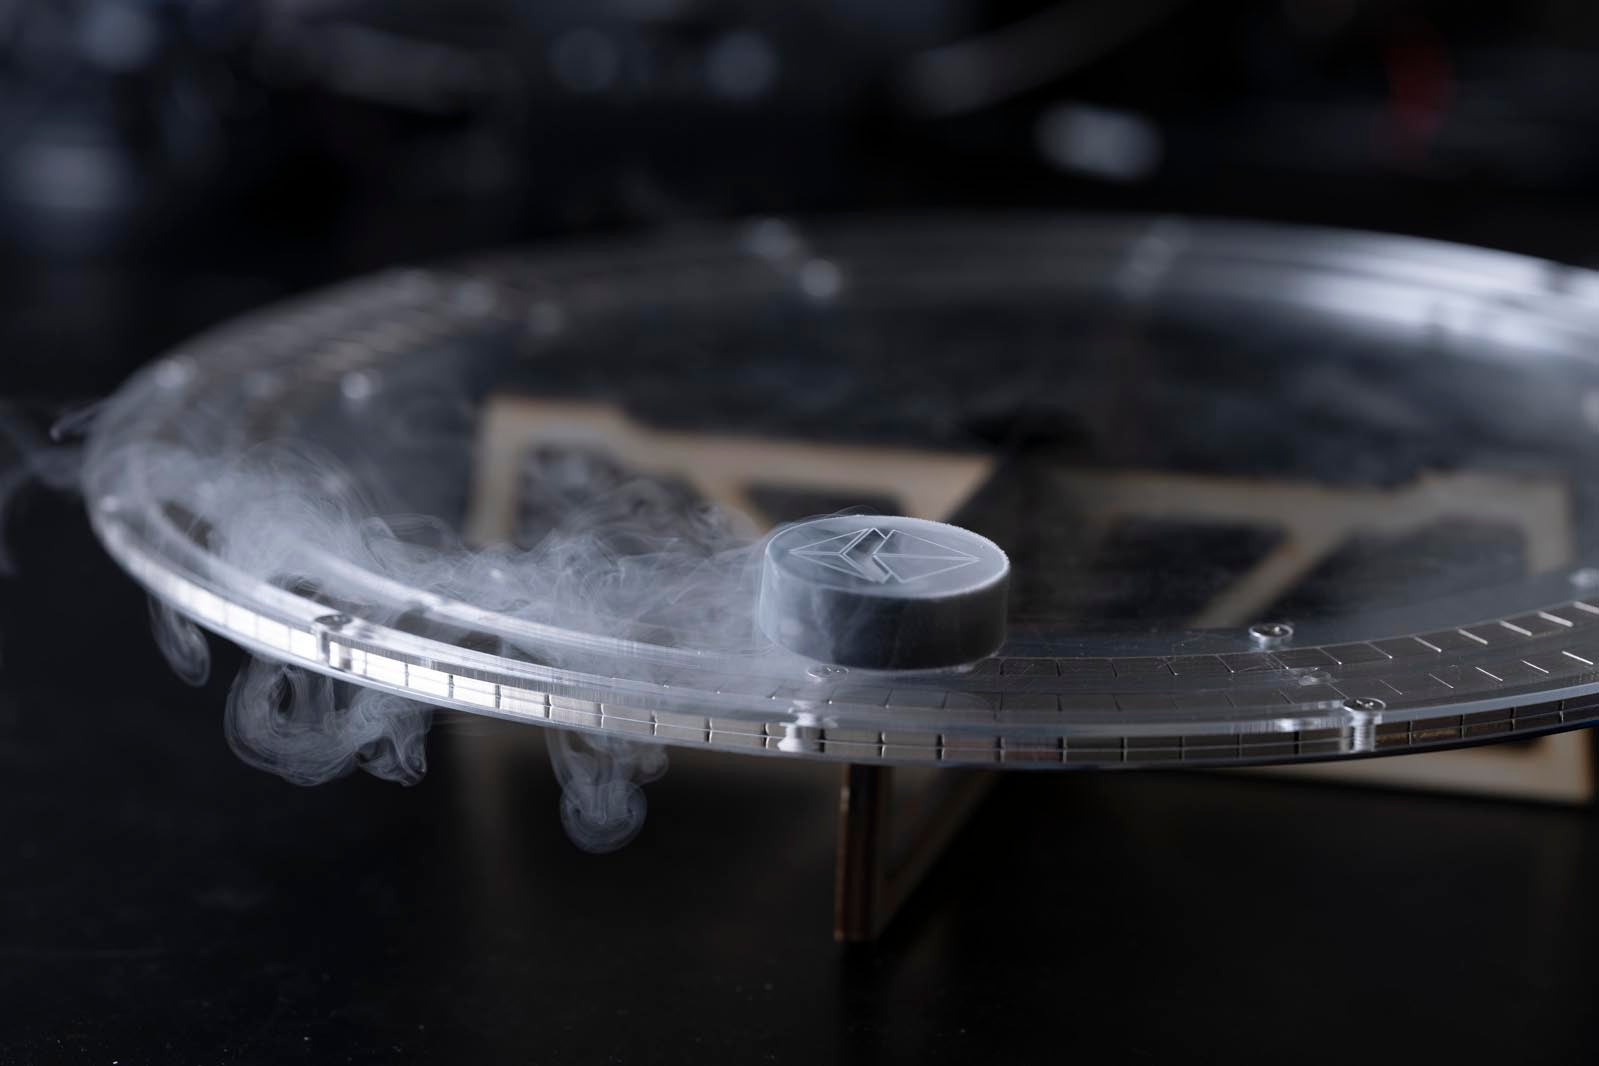 Magnet levitating on a nitrogen-cooled superconductor track.